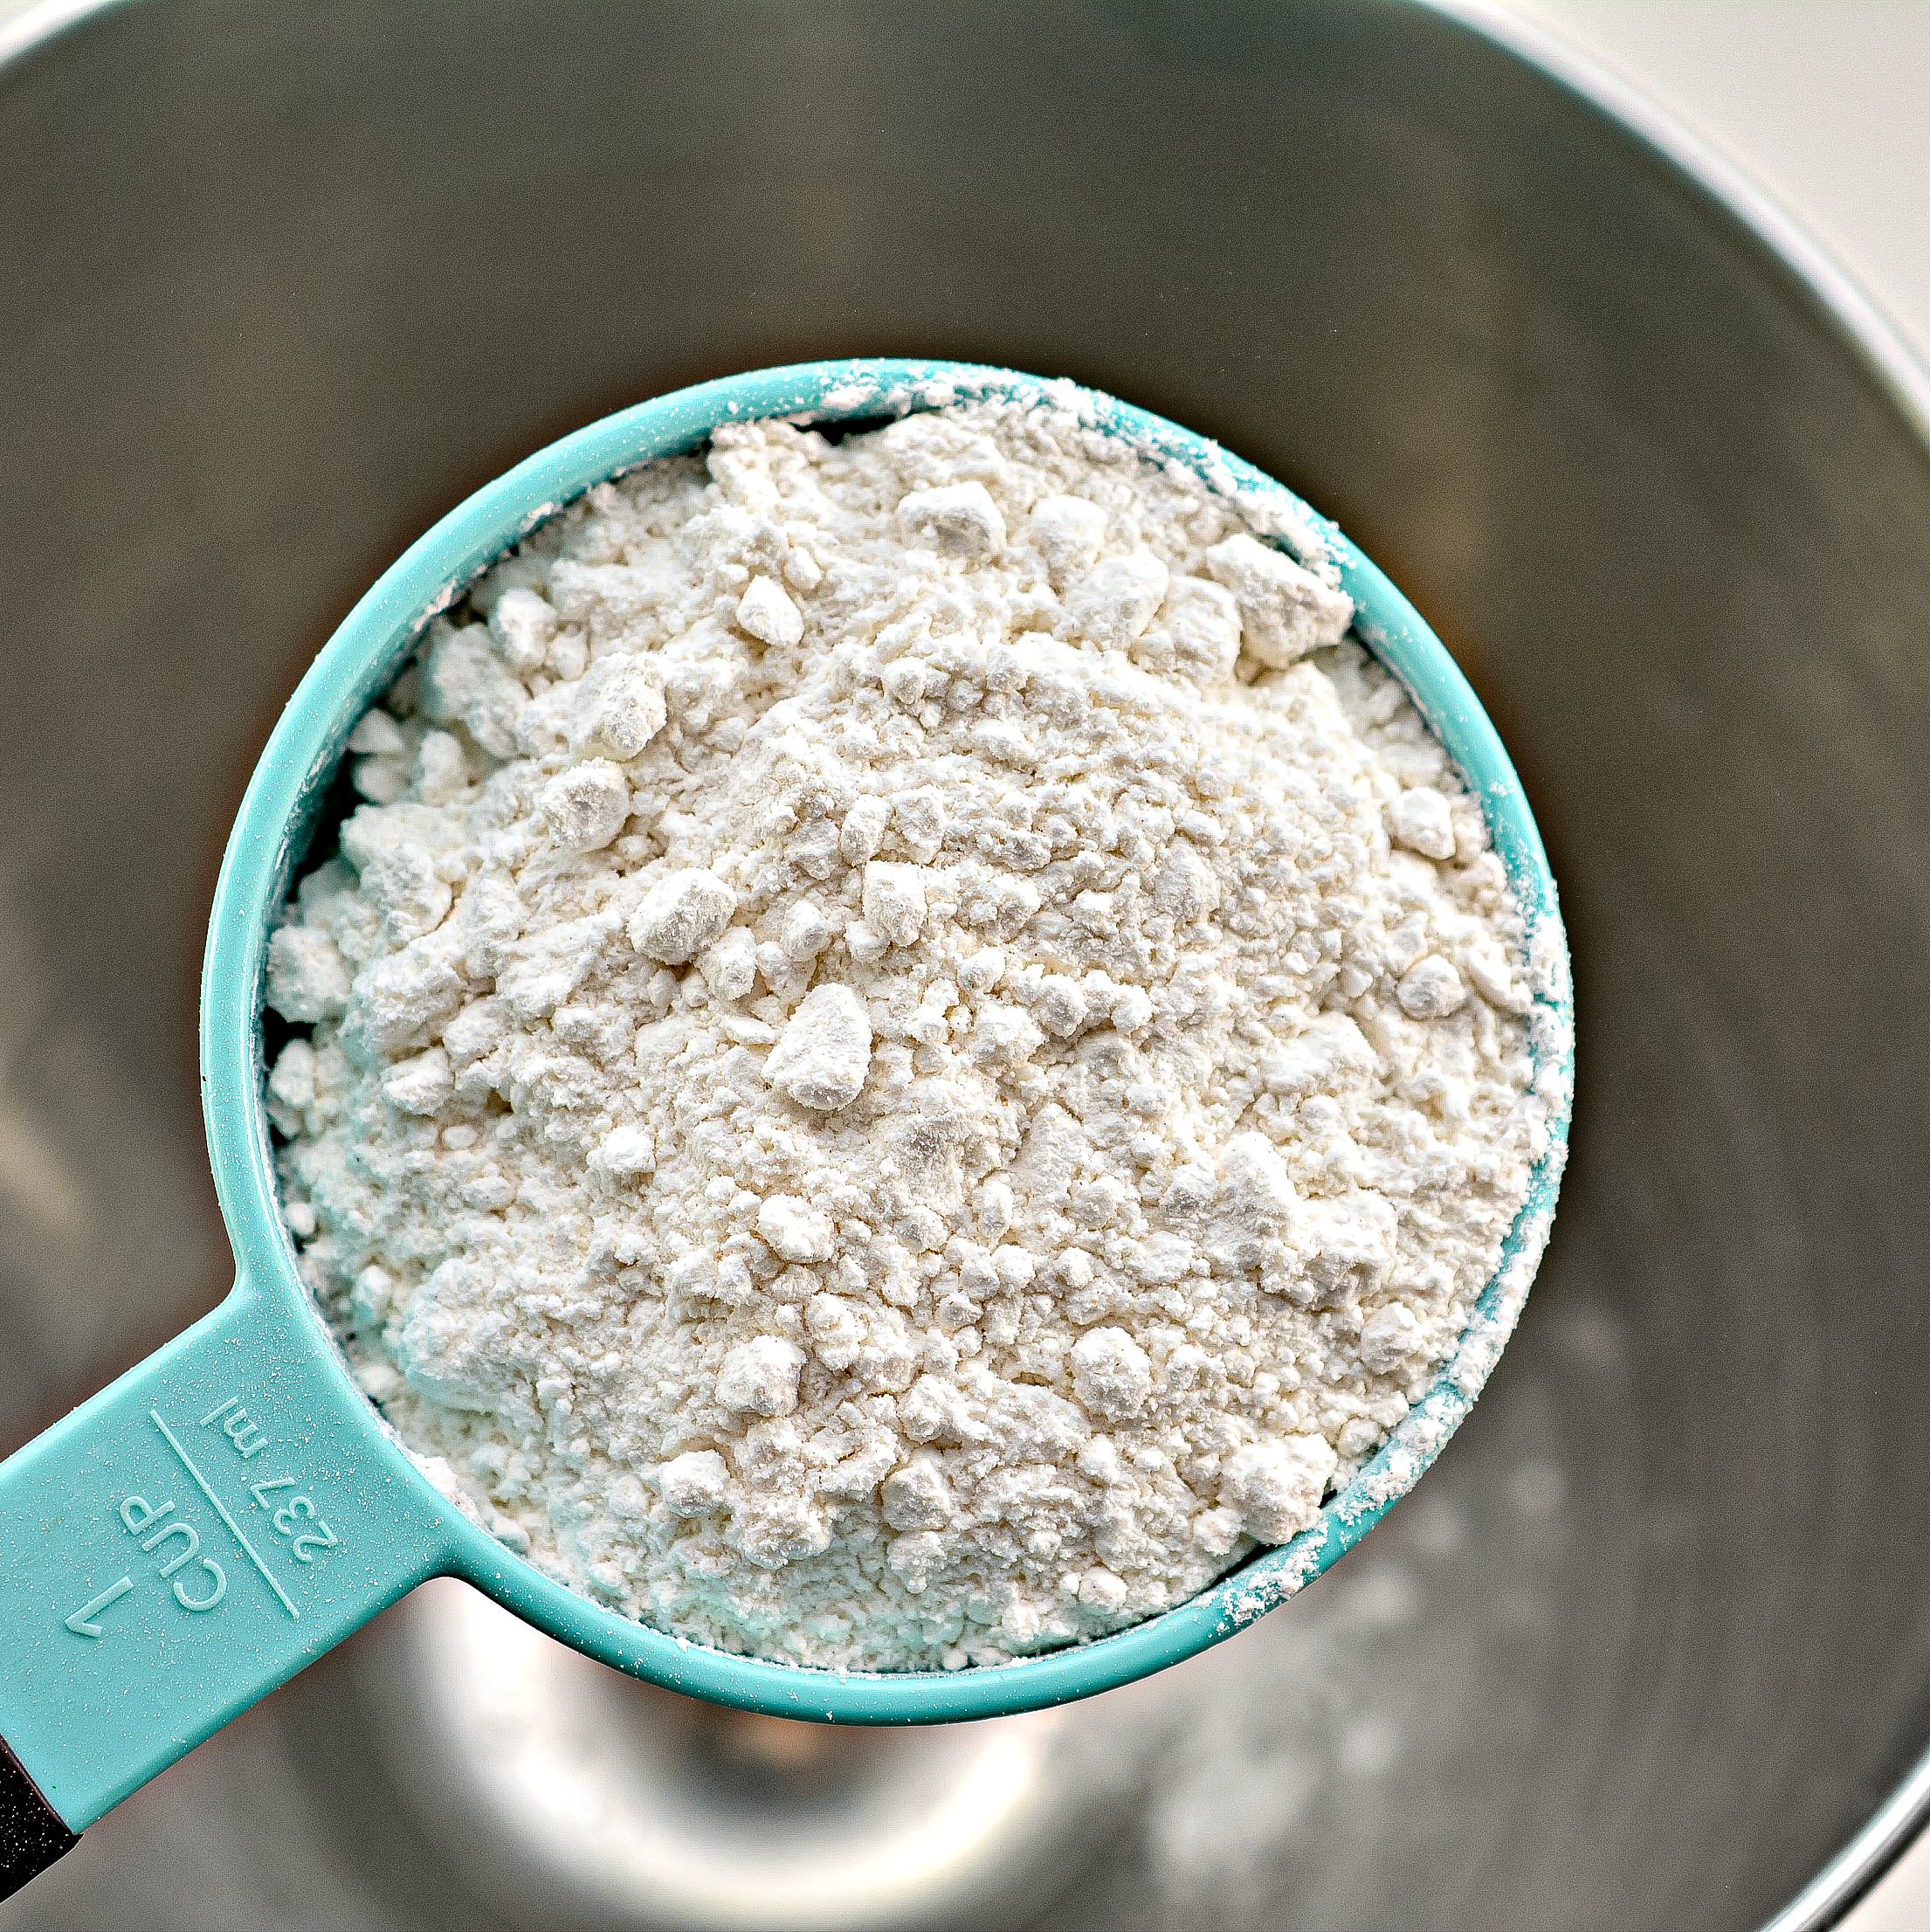 Adding Self-rising flour.